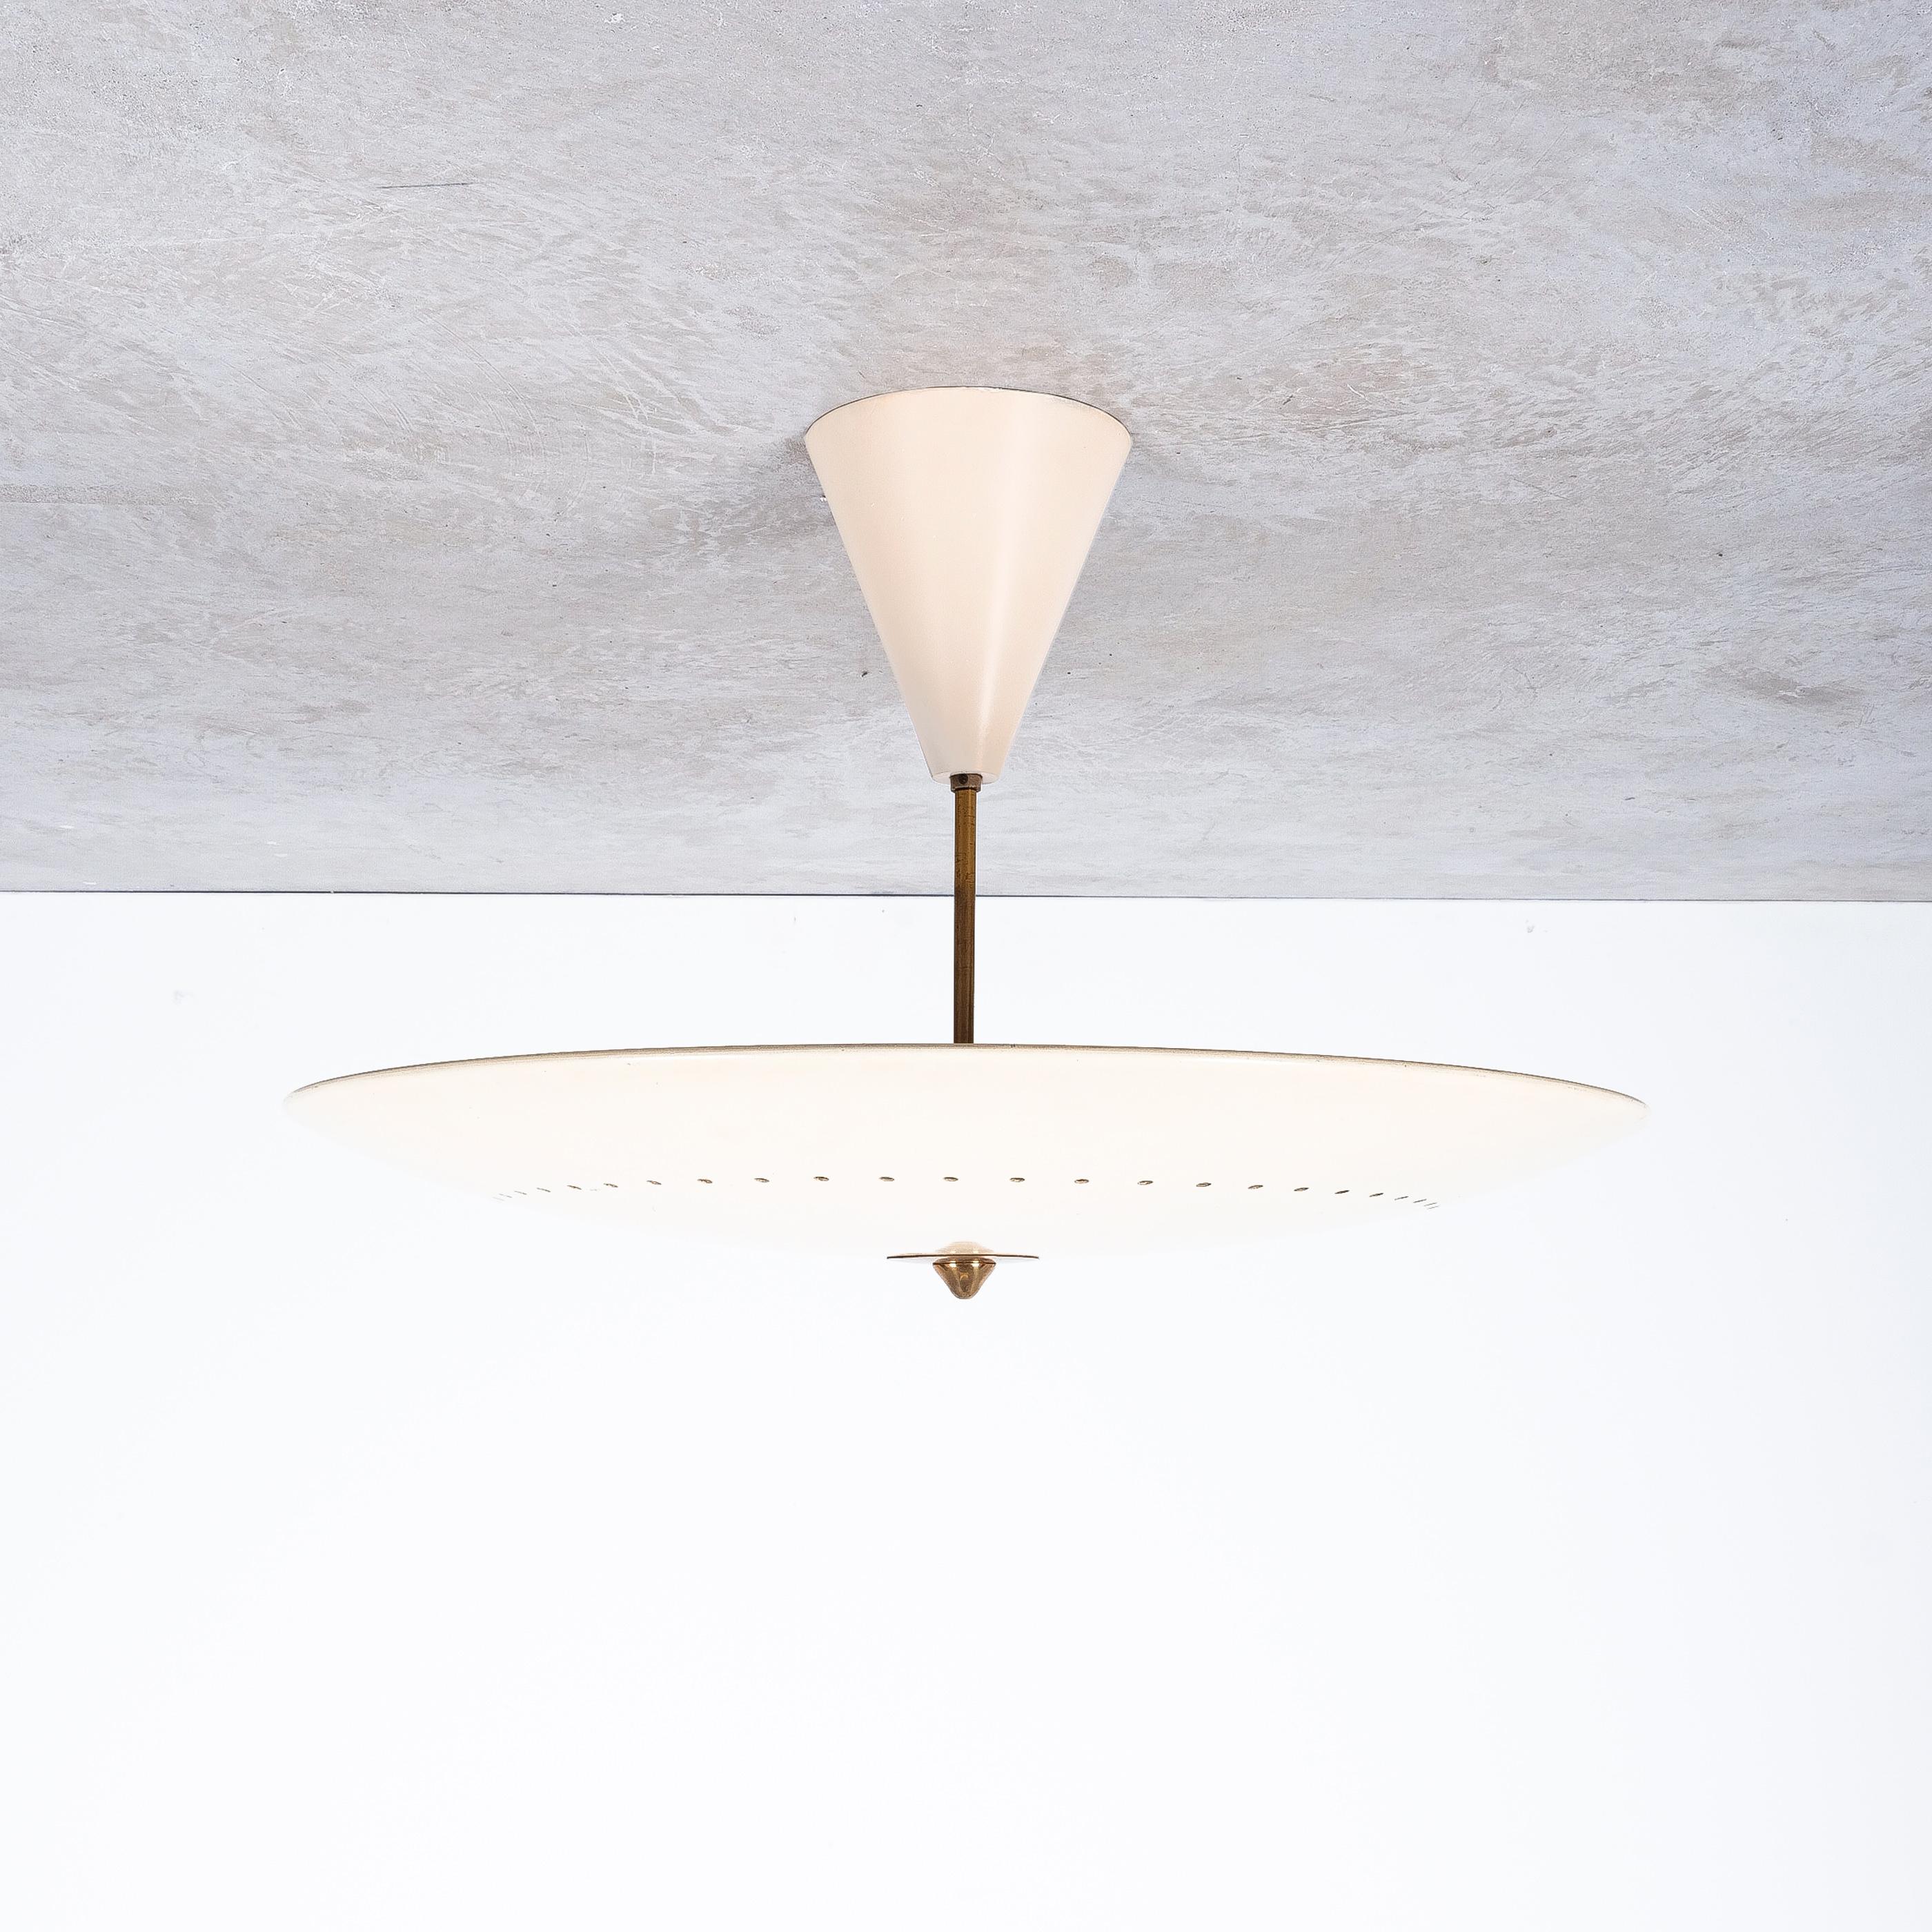 Italian Gino Sarfatti Arteluce 2031 Ceiling Lamp or Semi Flush Mount, Italy, 1950